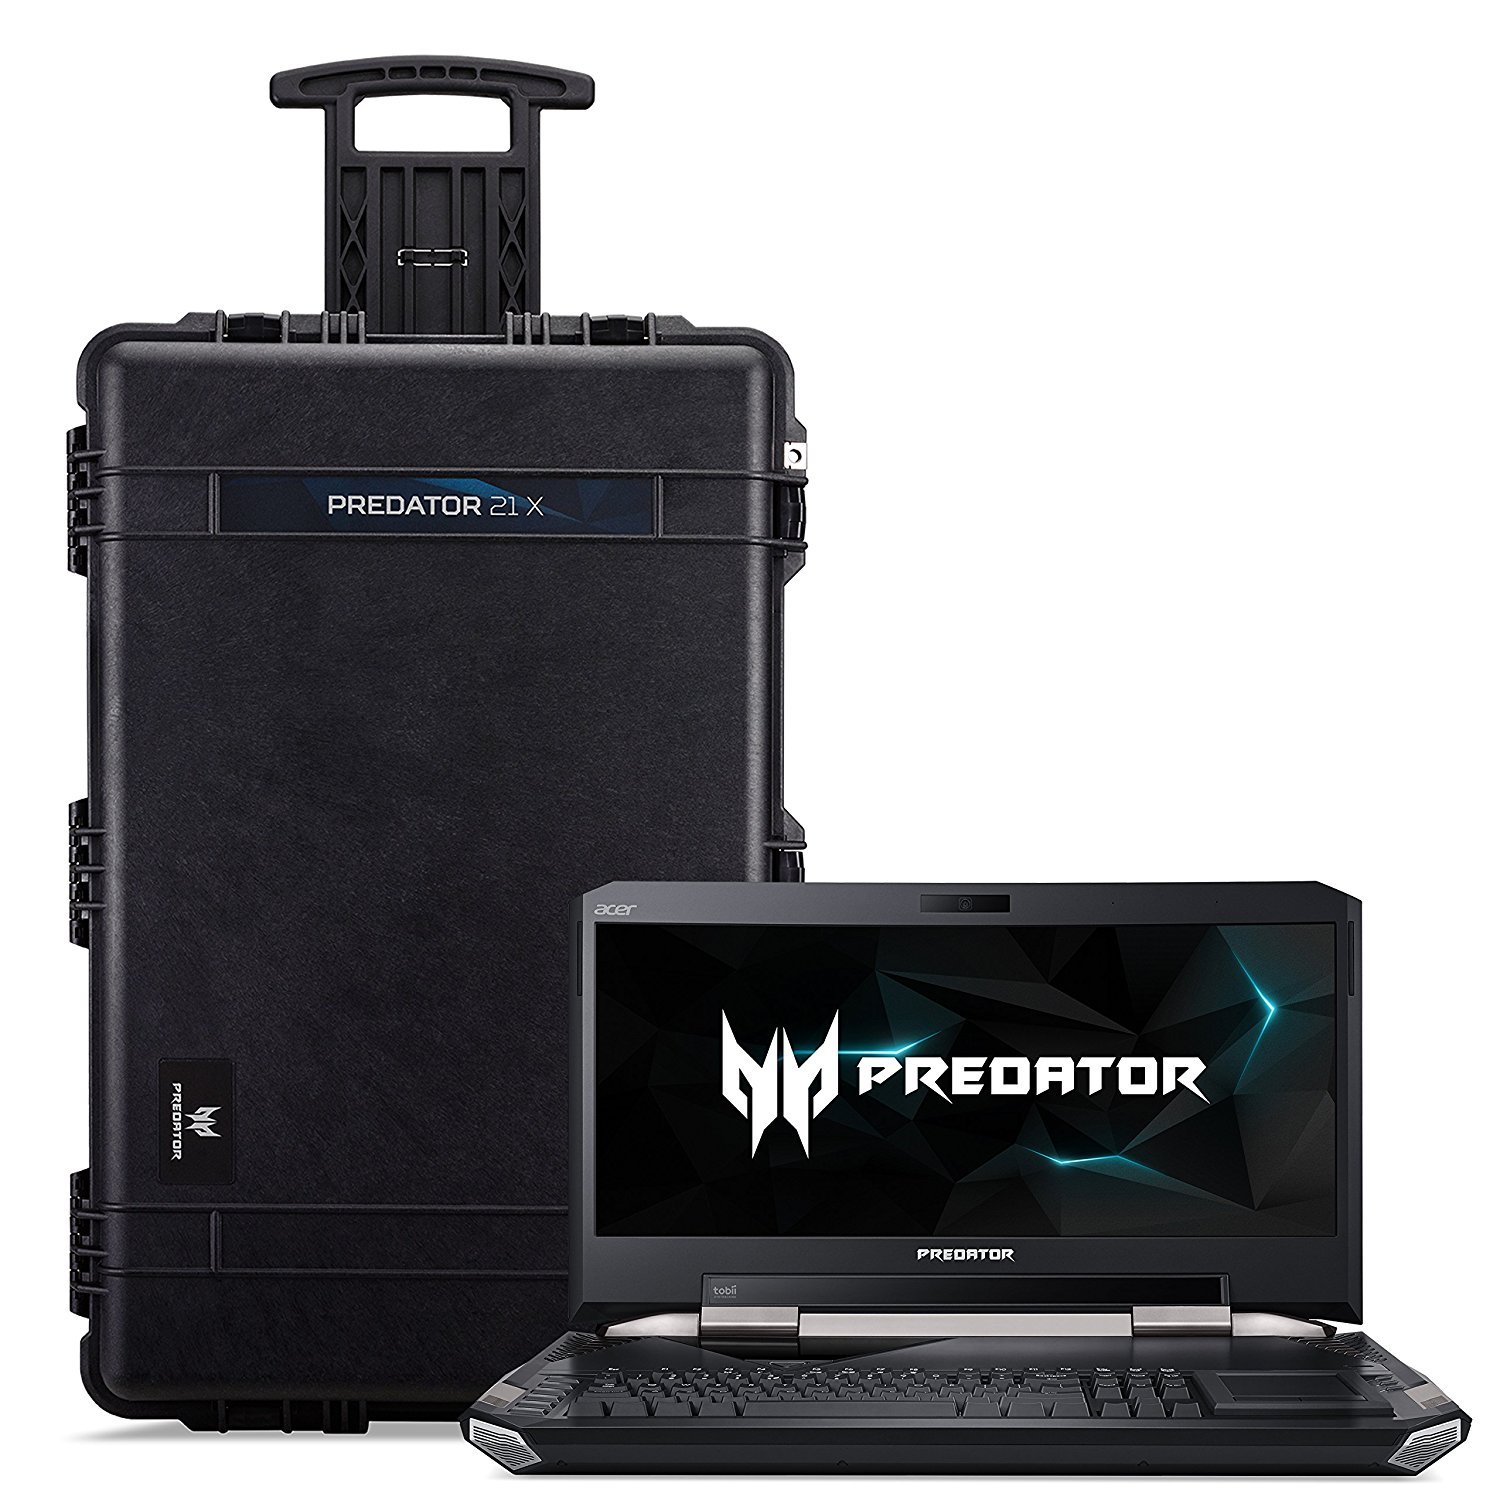 Acer Predator 21 X with Bag